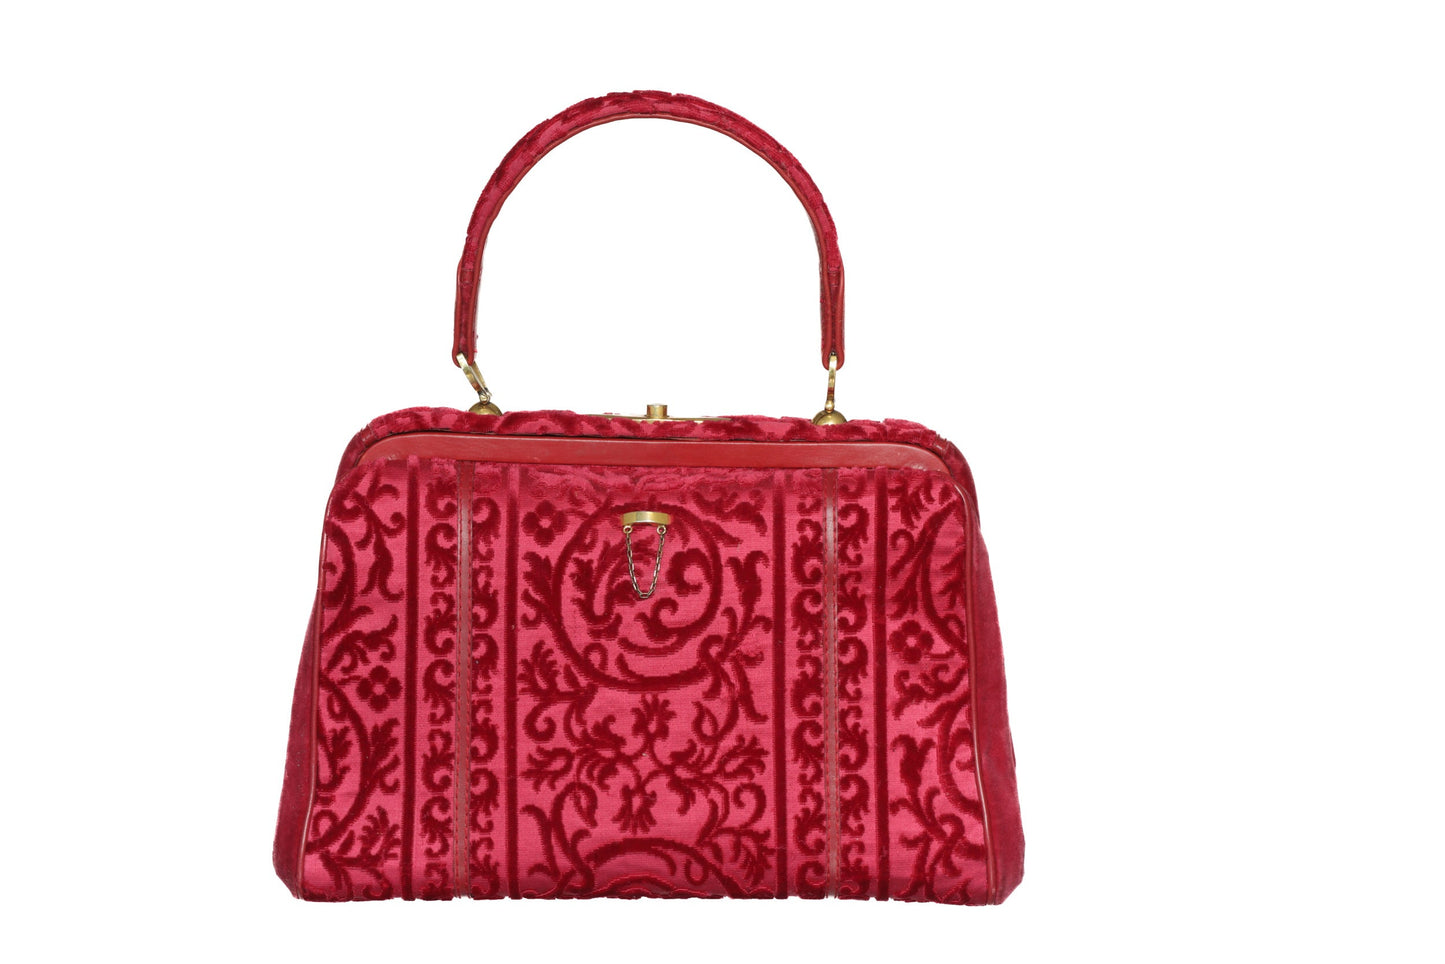 Roberta Di Camerino handbag from the 60s